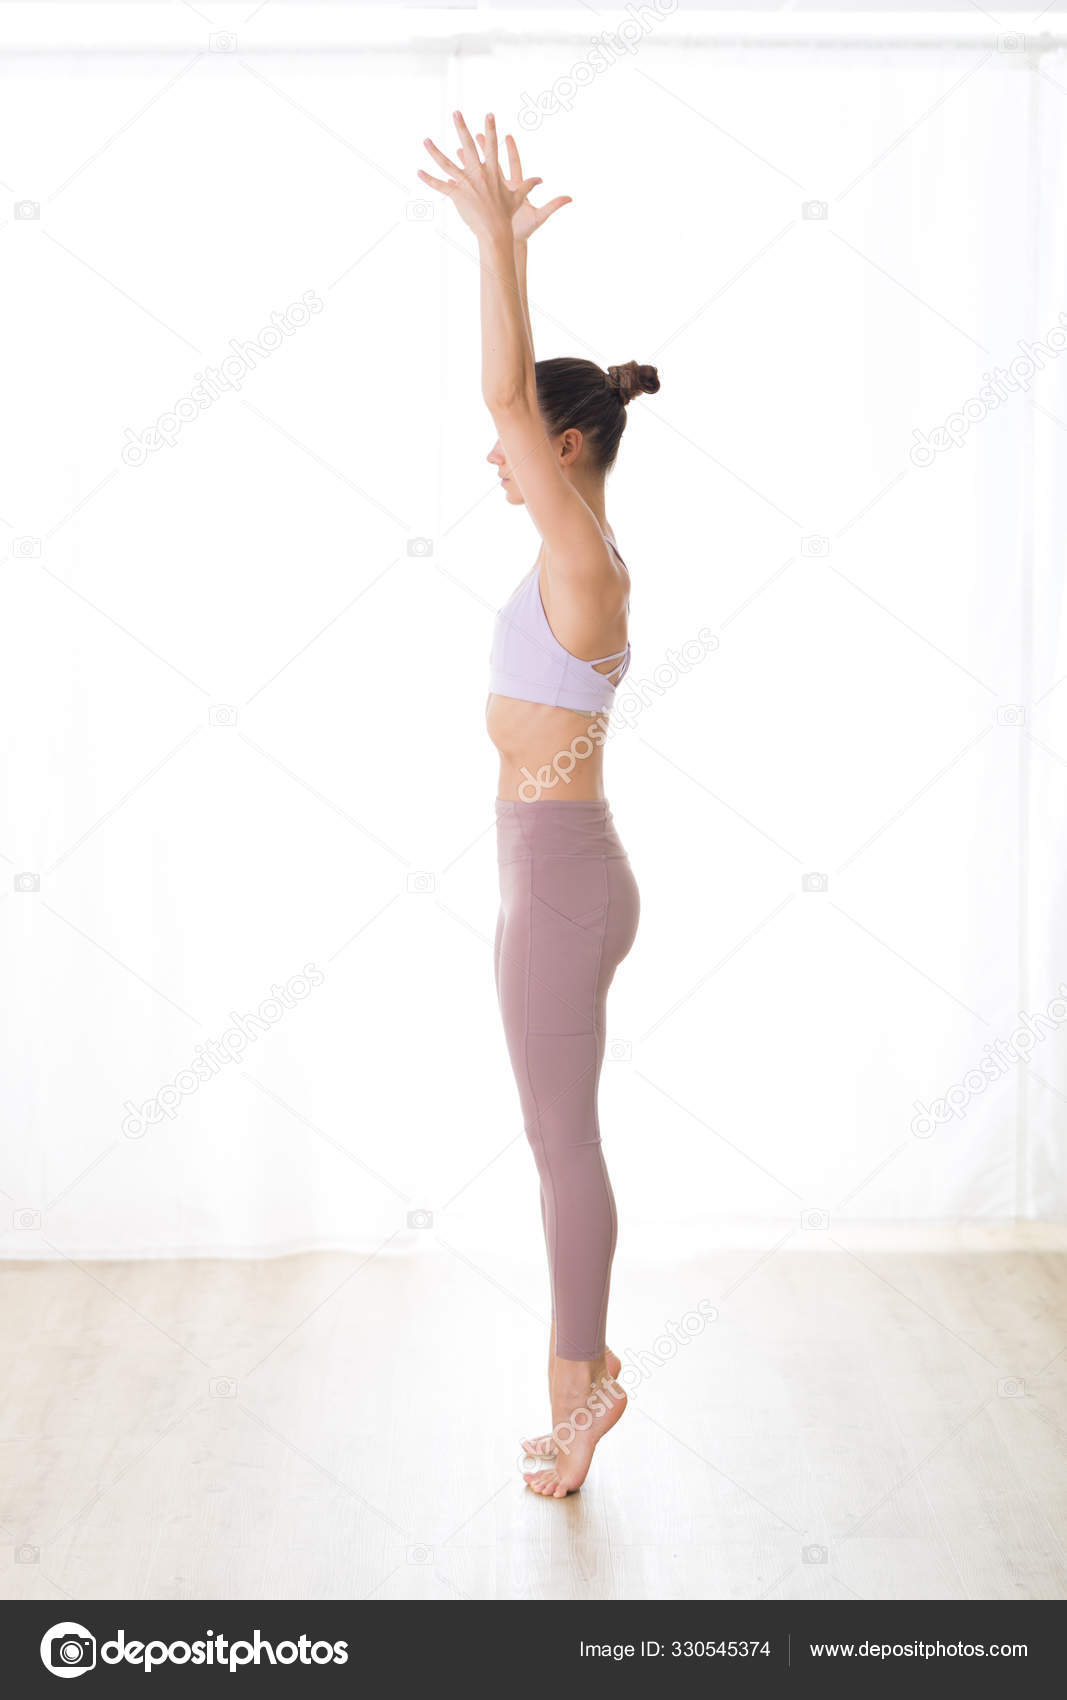 Bikram Yoga Poses Guide For Everyone - Yoga Poses 4 You